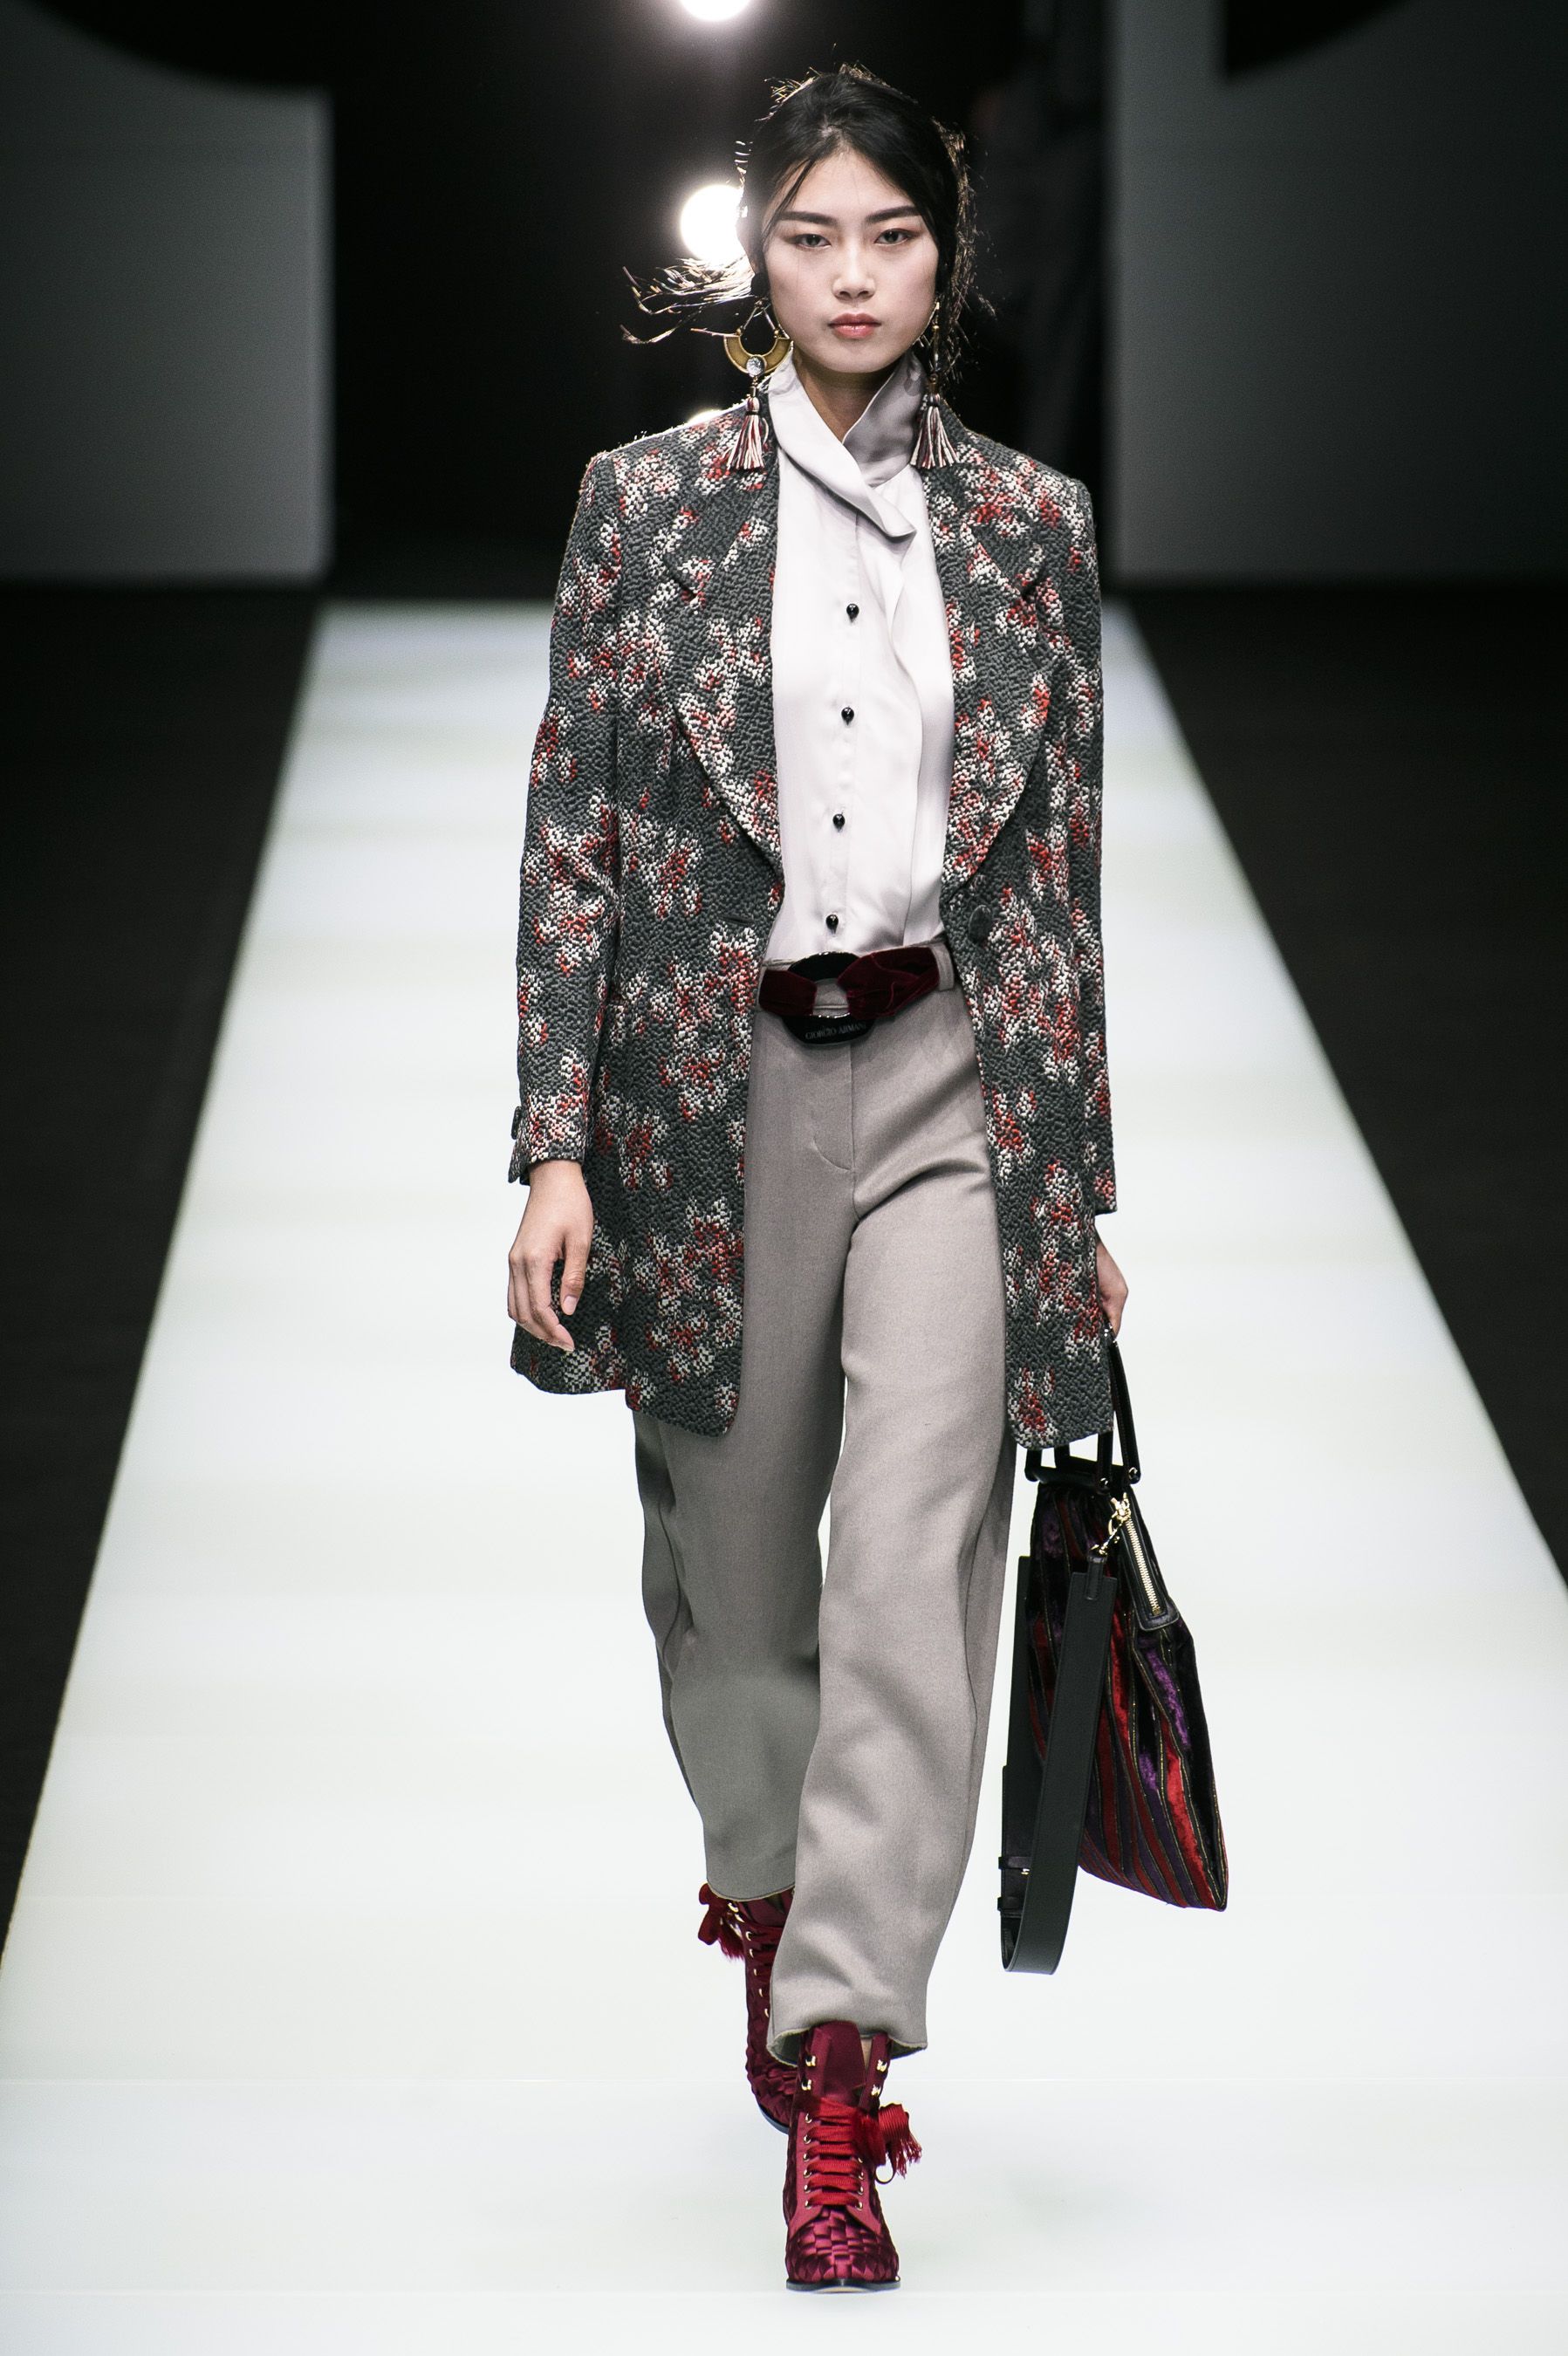 Giorgio Armani Runway at Milan Fashion Week